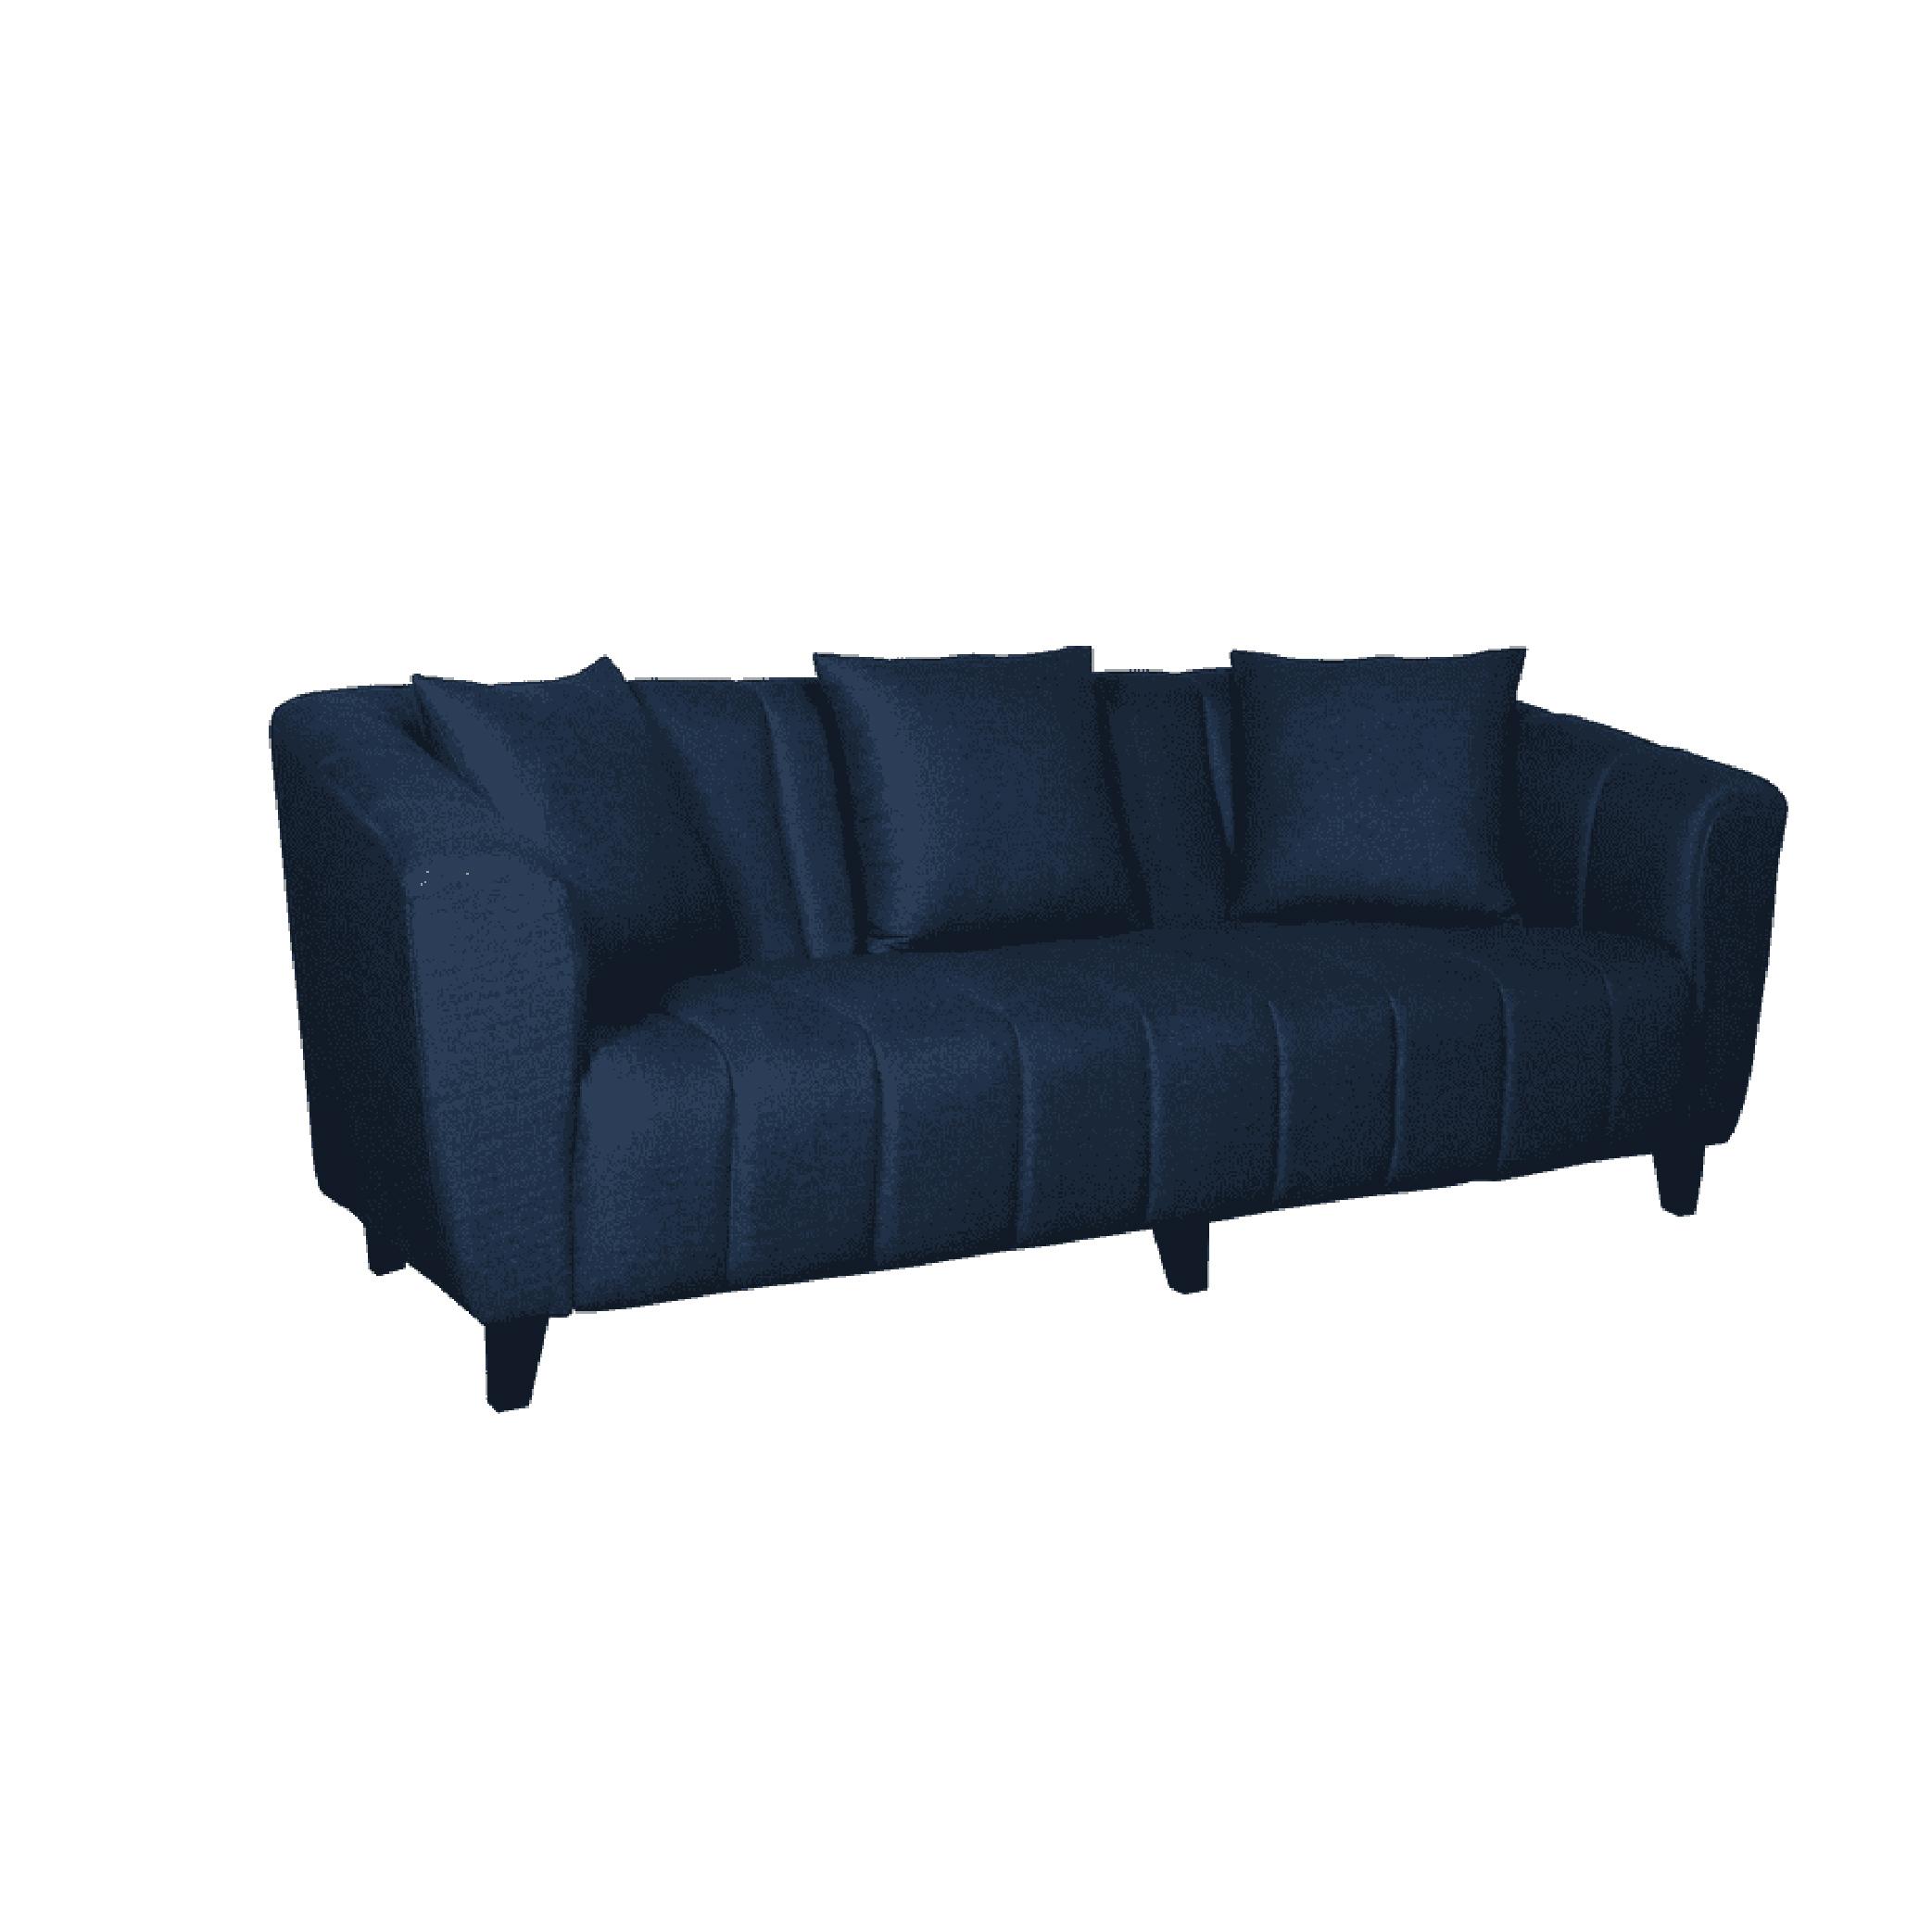 Bobbio Three Seater Sofa in Blue Colour